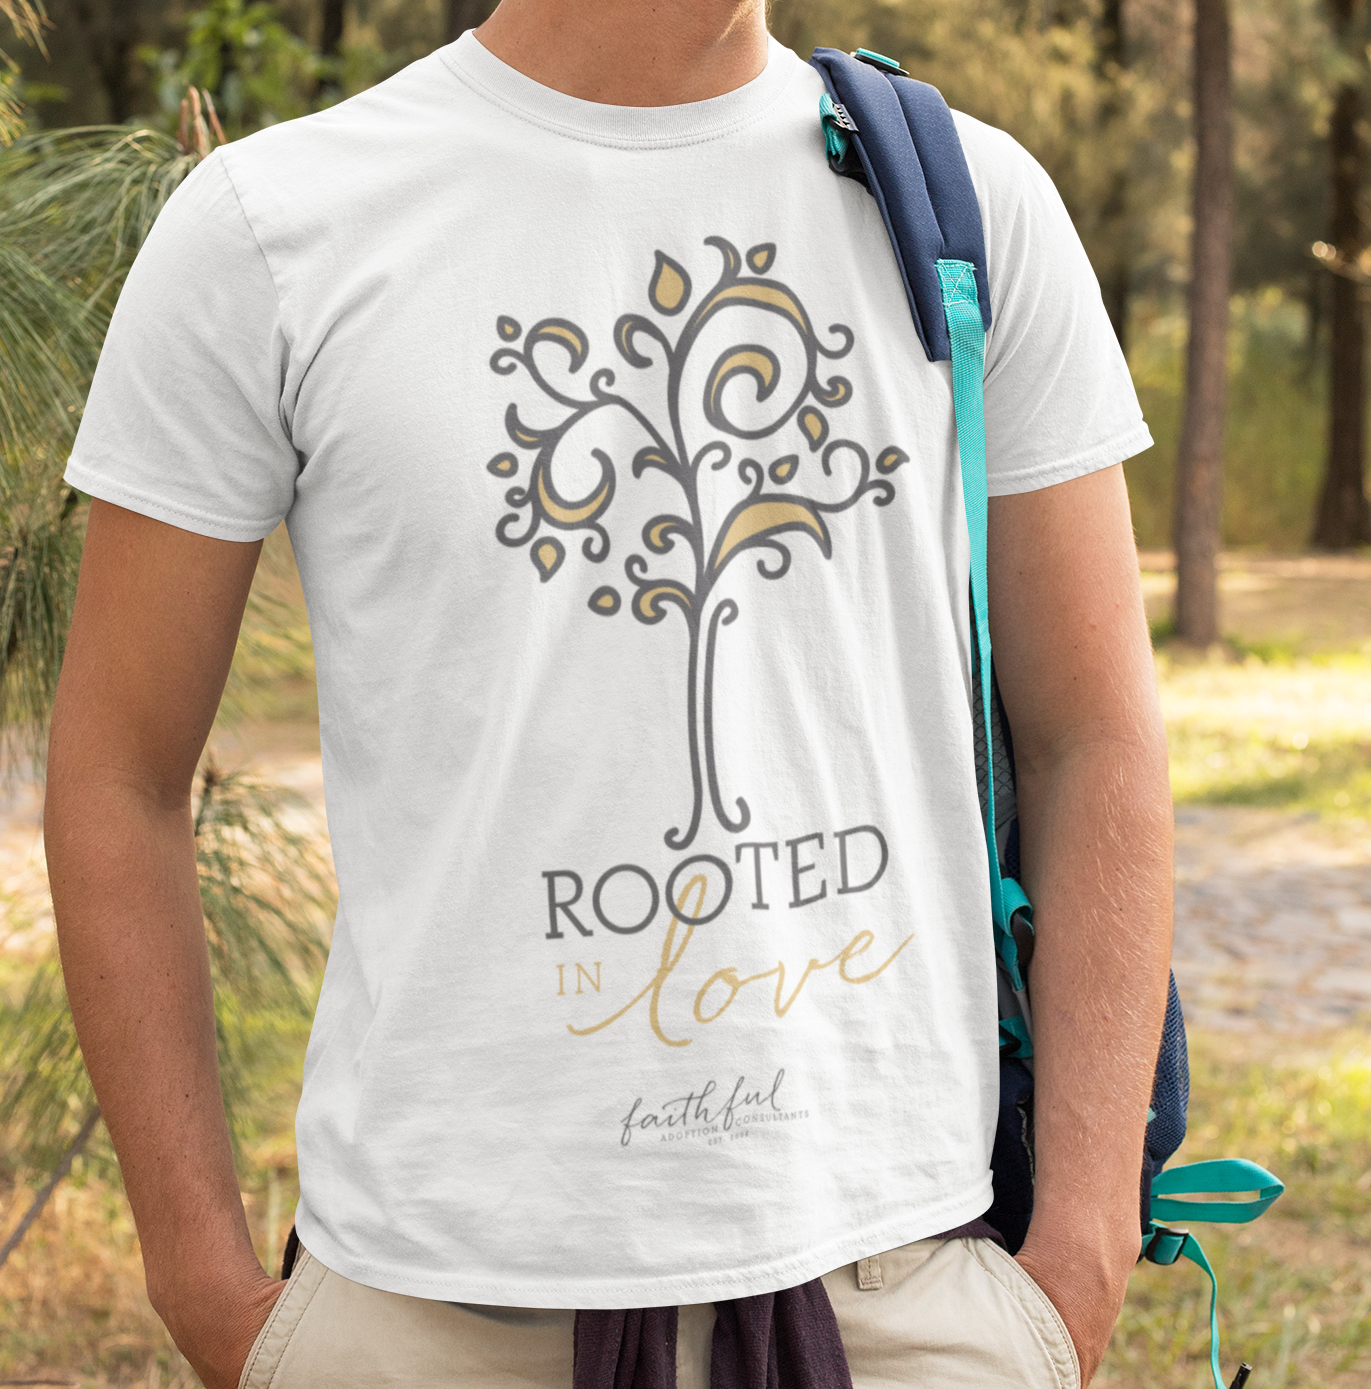 Faithful Adoption T-shirt Design